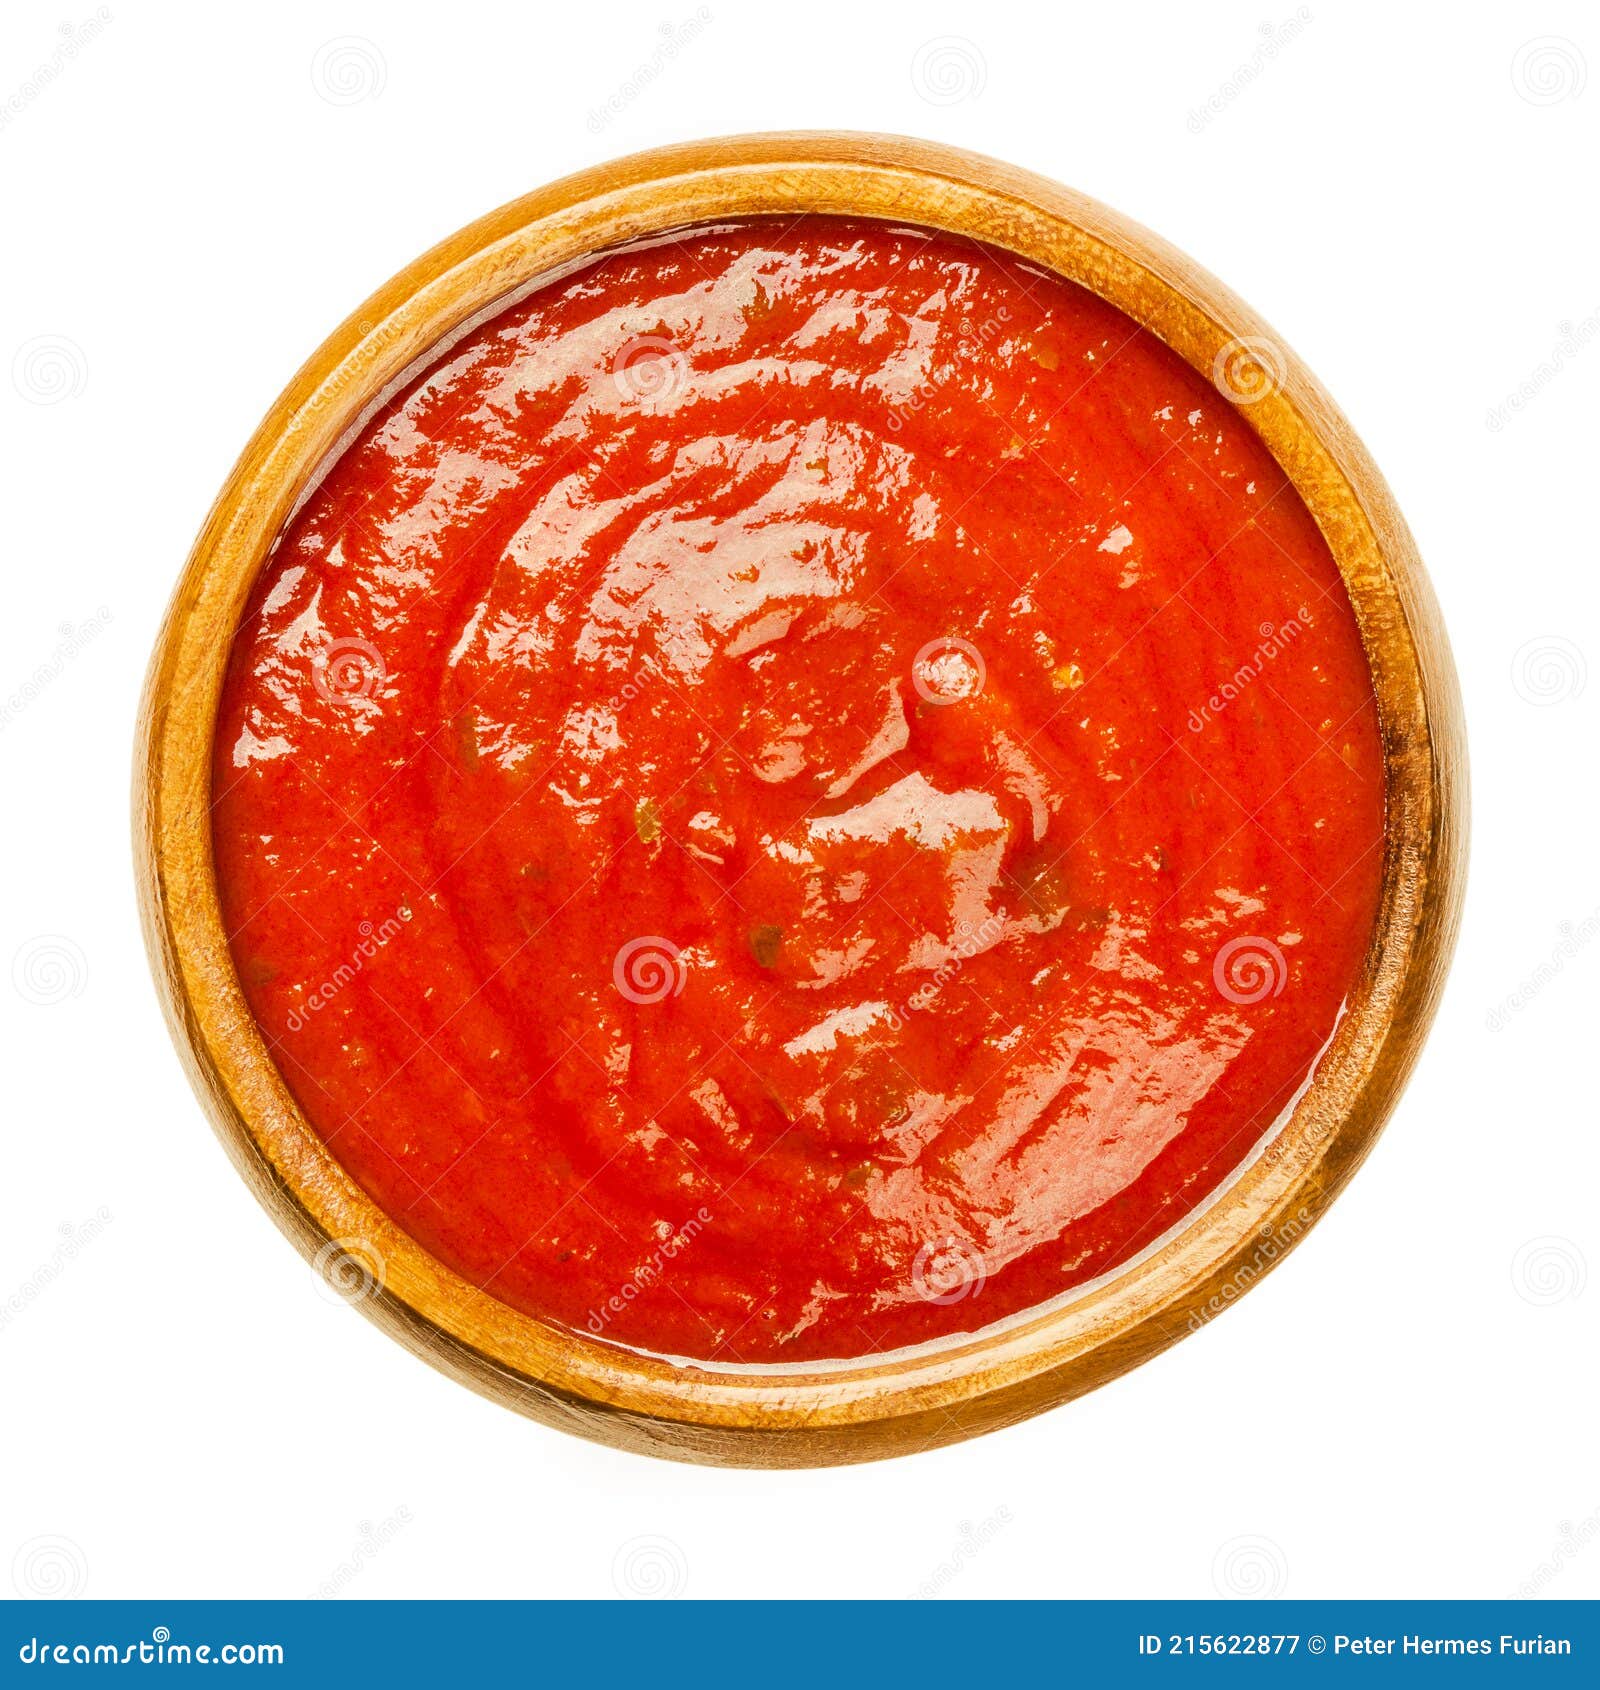 tomato sauce with herbs, neapolitan sauce, salsa roja, in wooden bowl